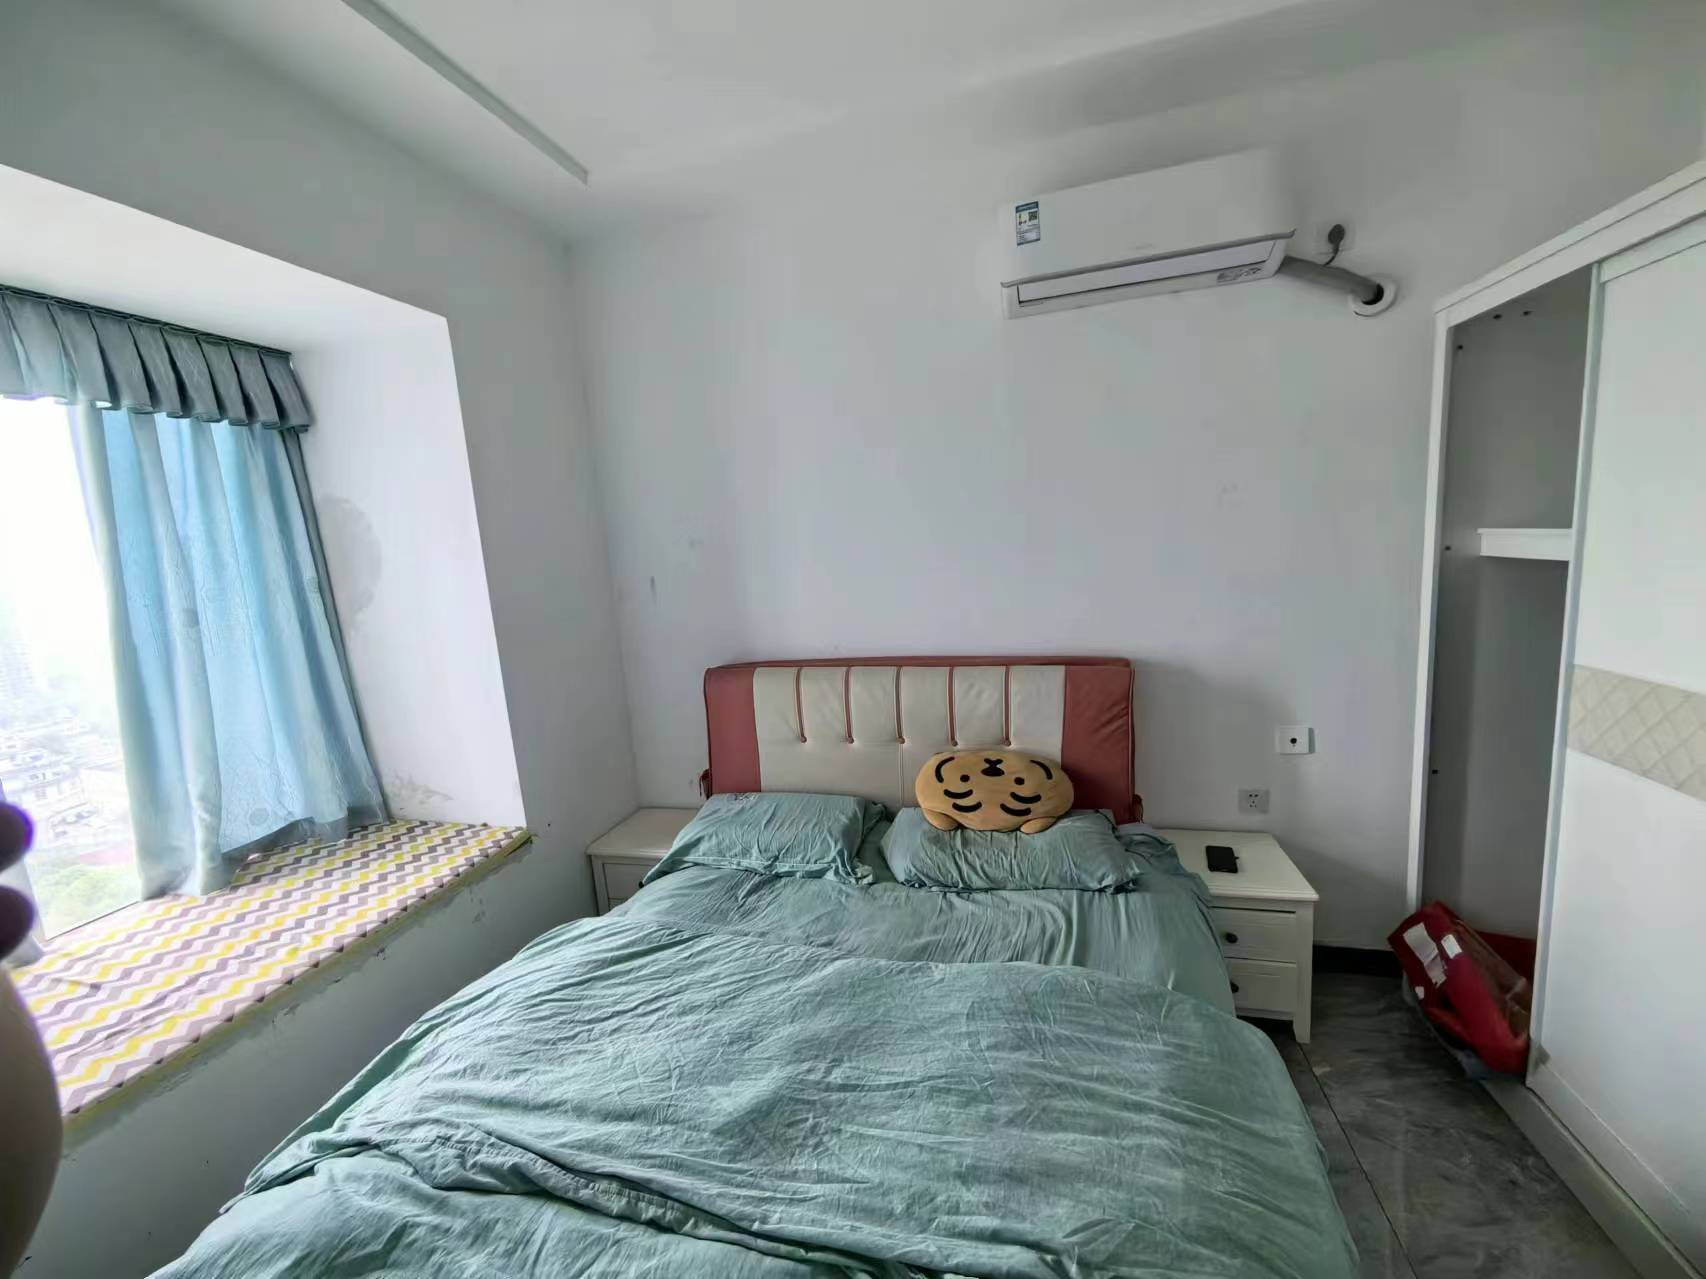 Chengdu-Shuangliu-Cozy Home,Clean&Comfy,No Gender Limit,Pet Friendly